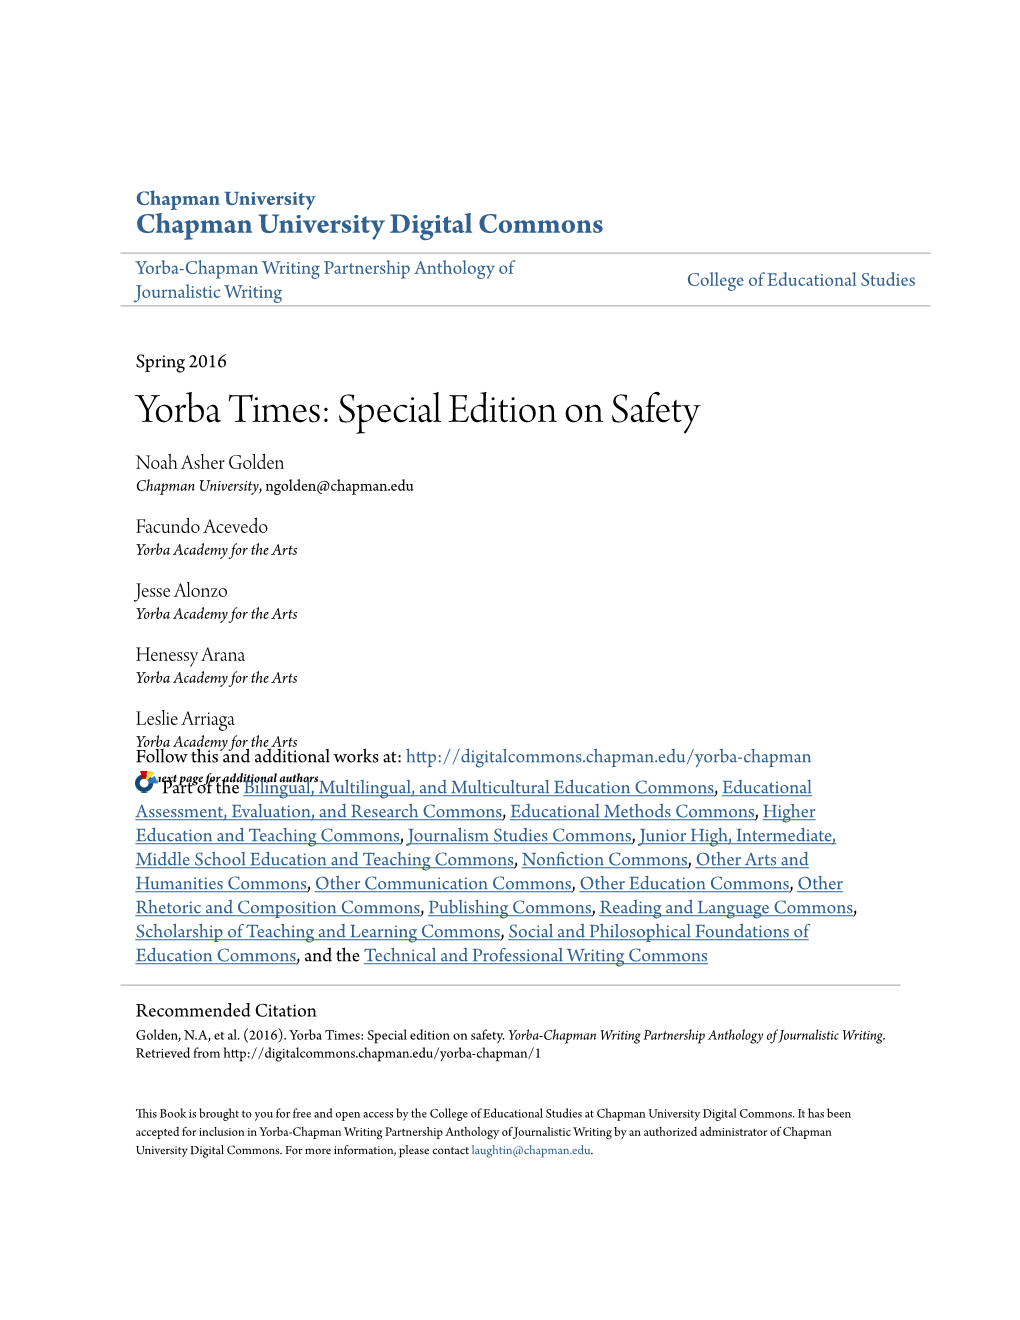 Yorba Times: Special Edition on Safety Noah Asher Golden Chapman University, Ngolden@Chapman.Edu